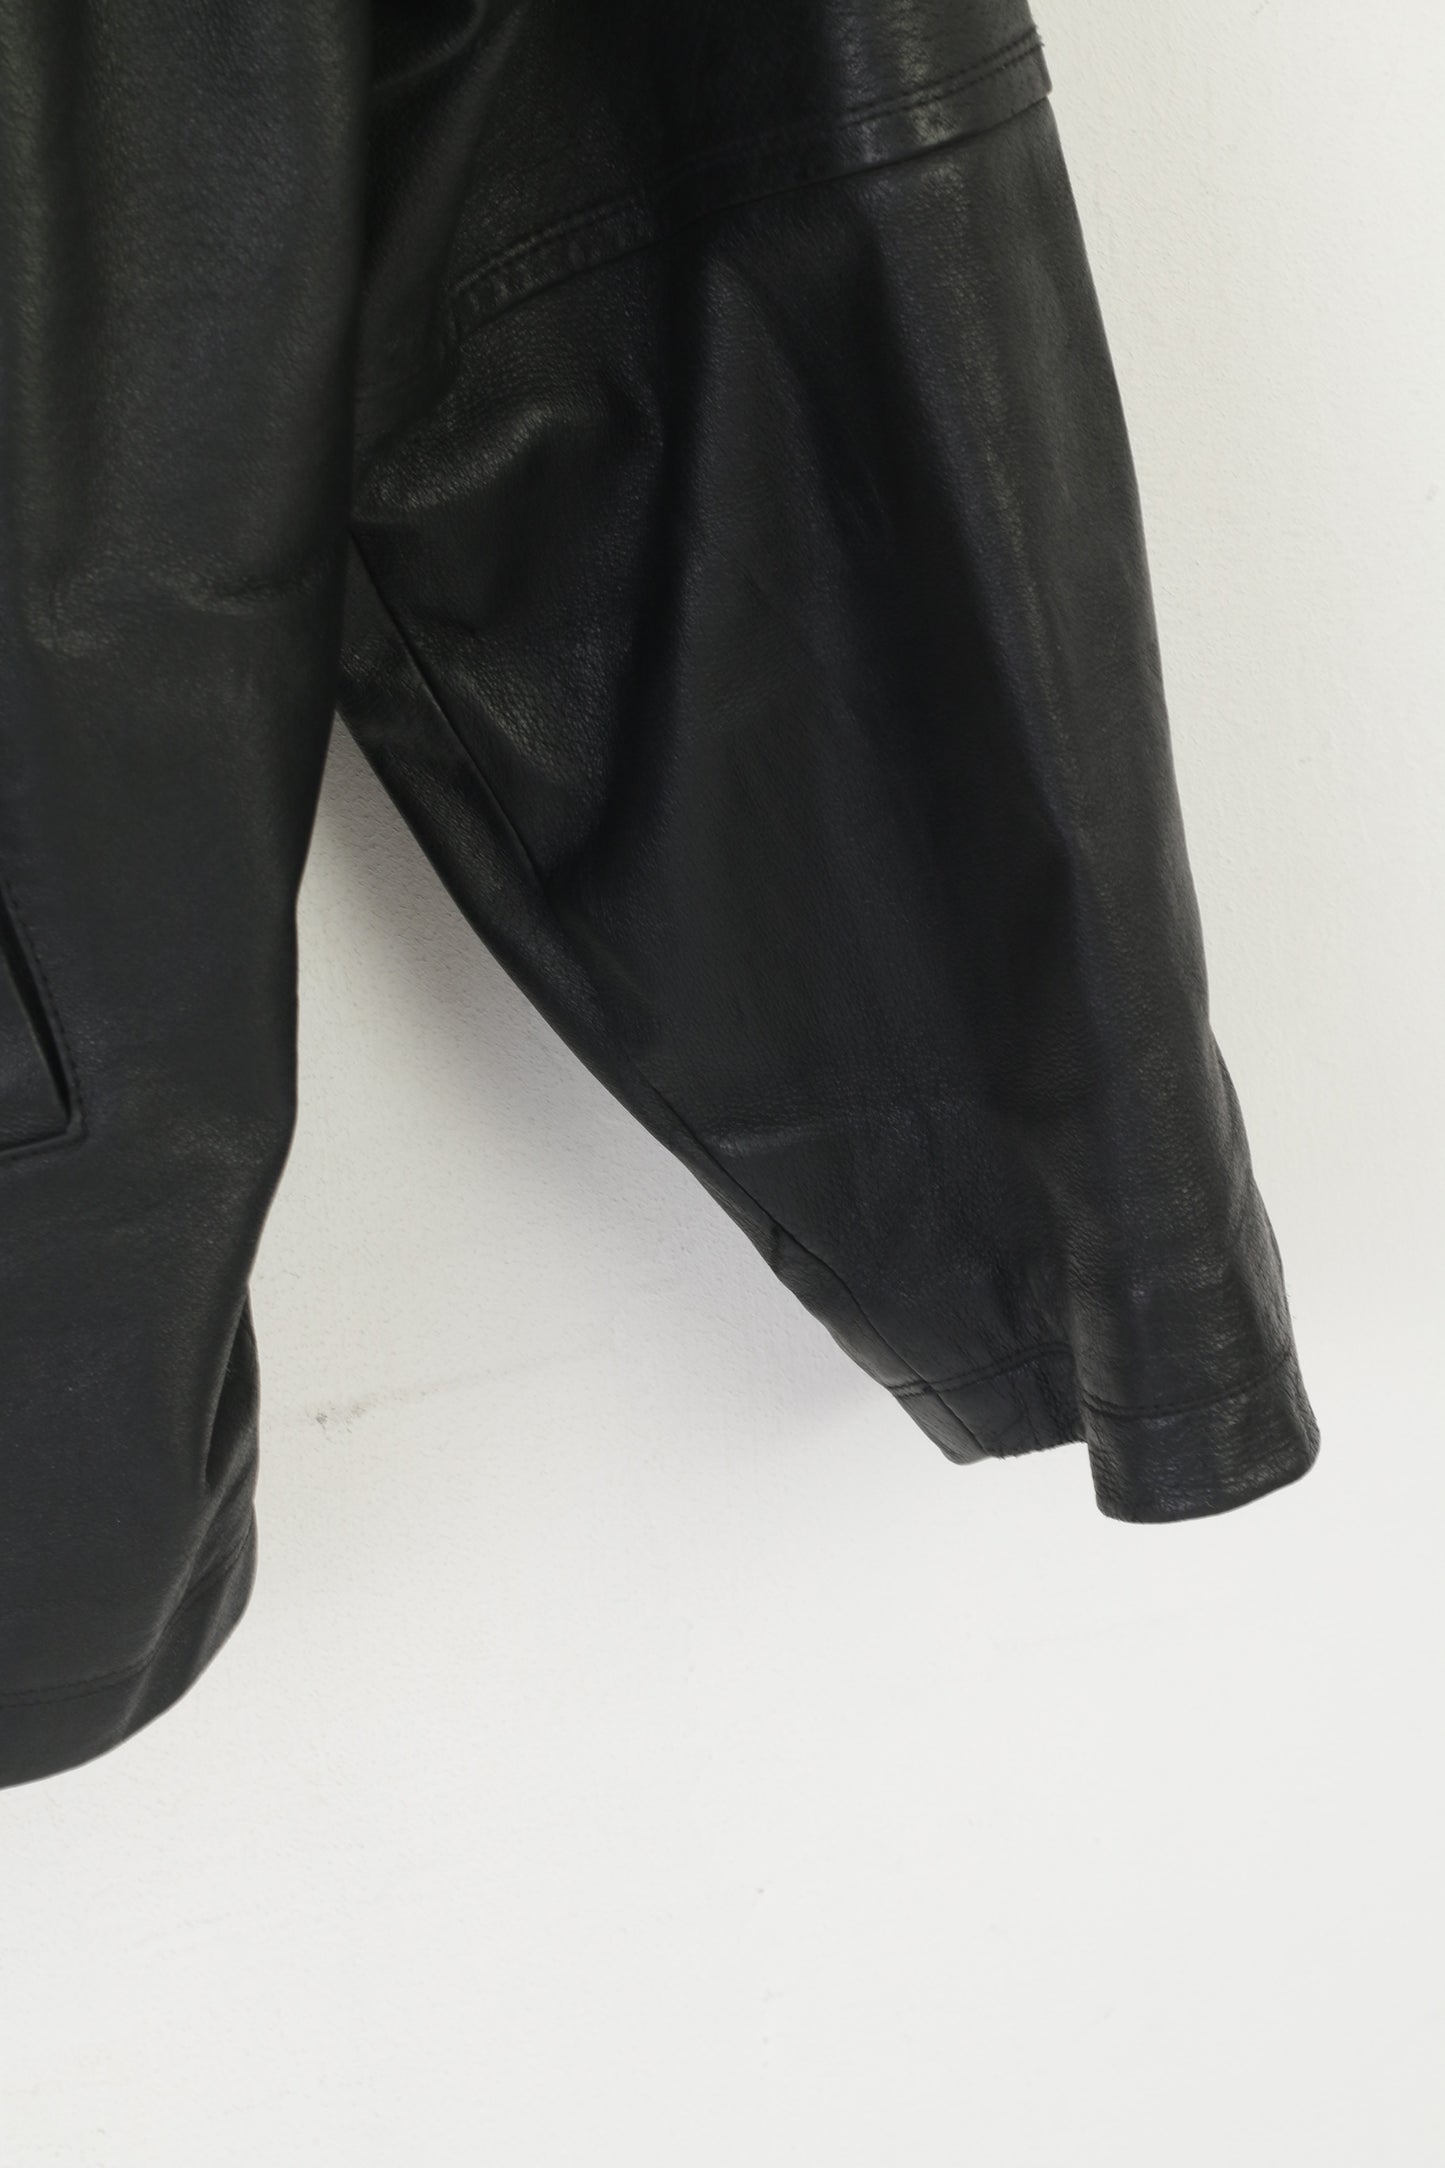 C&A Colonial Lines Men XL Jacket Black Leather Full Zip Biker Classic Top